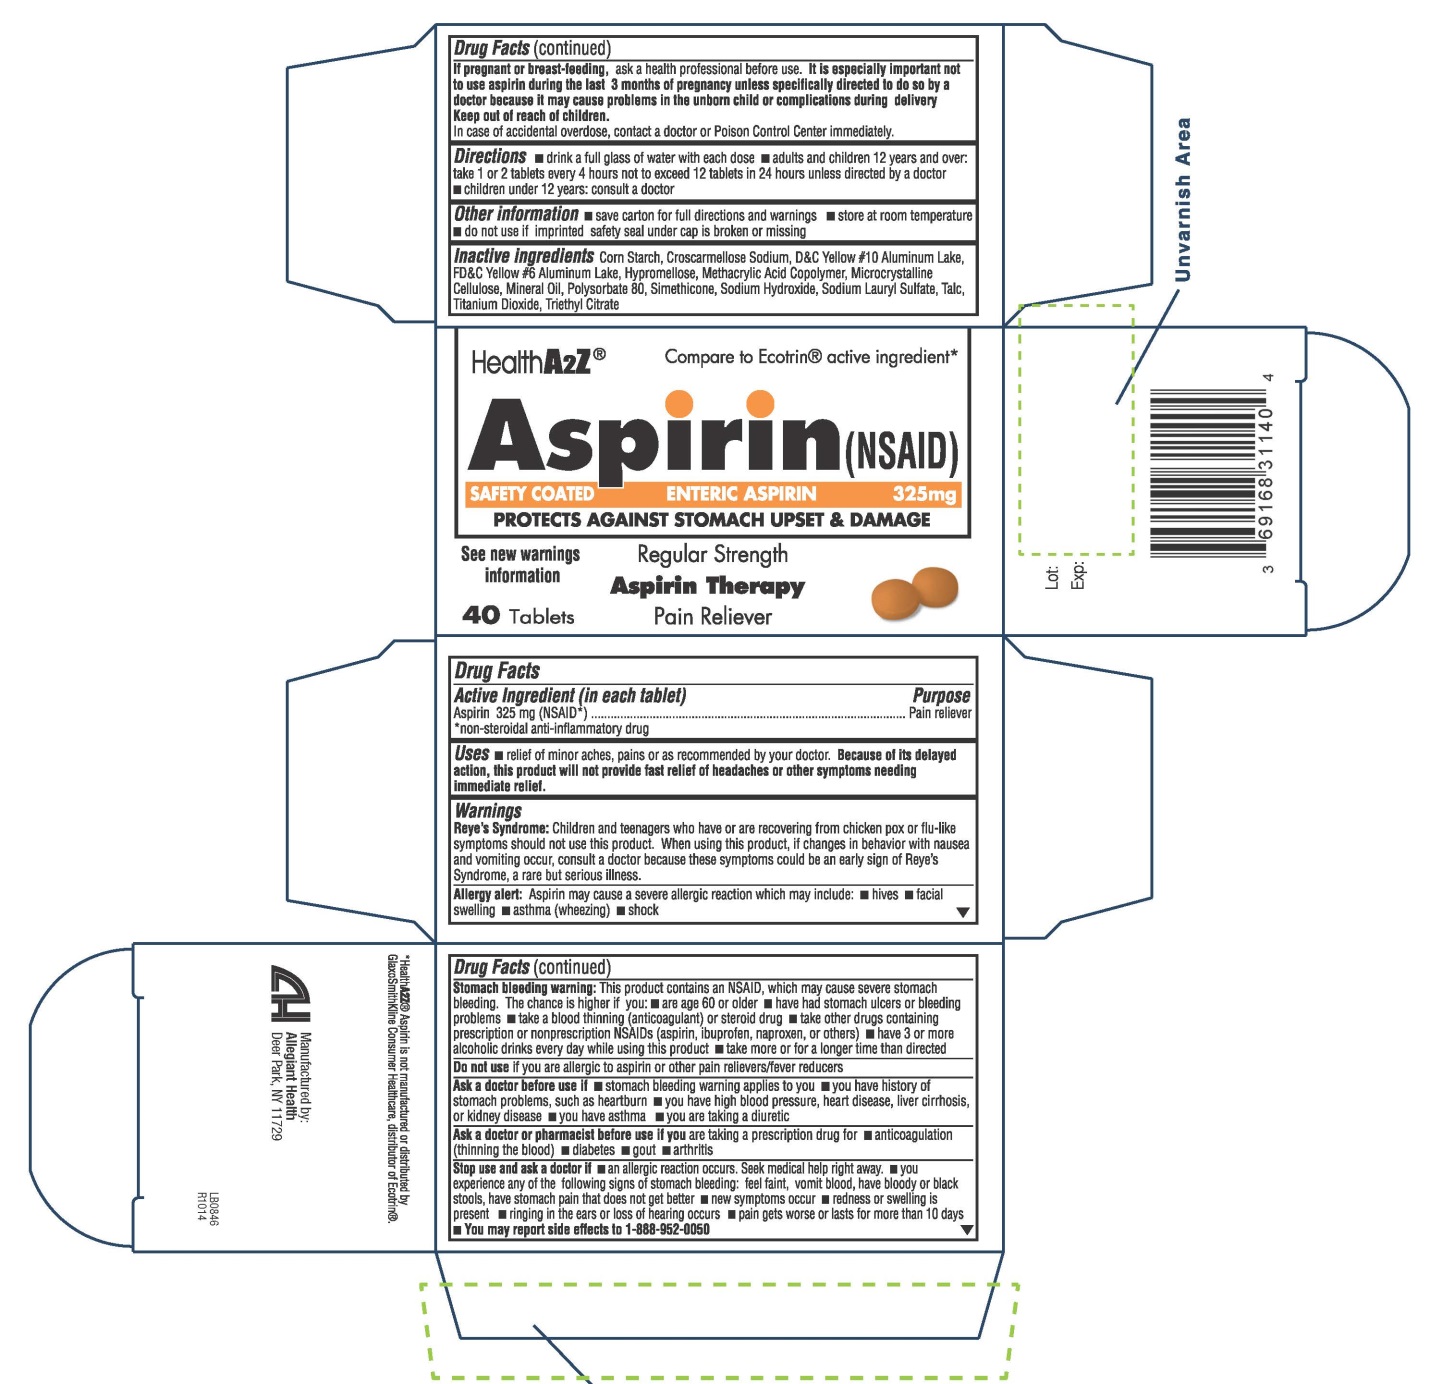 Z:\SPL-OTC Mono\Allegiant Health\Aspirin 325 mg EC\LB0846.jpg